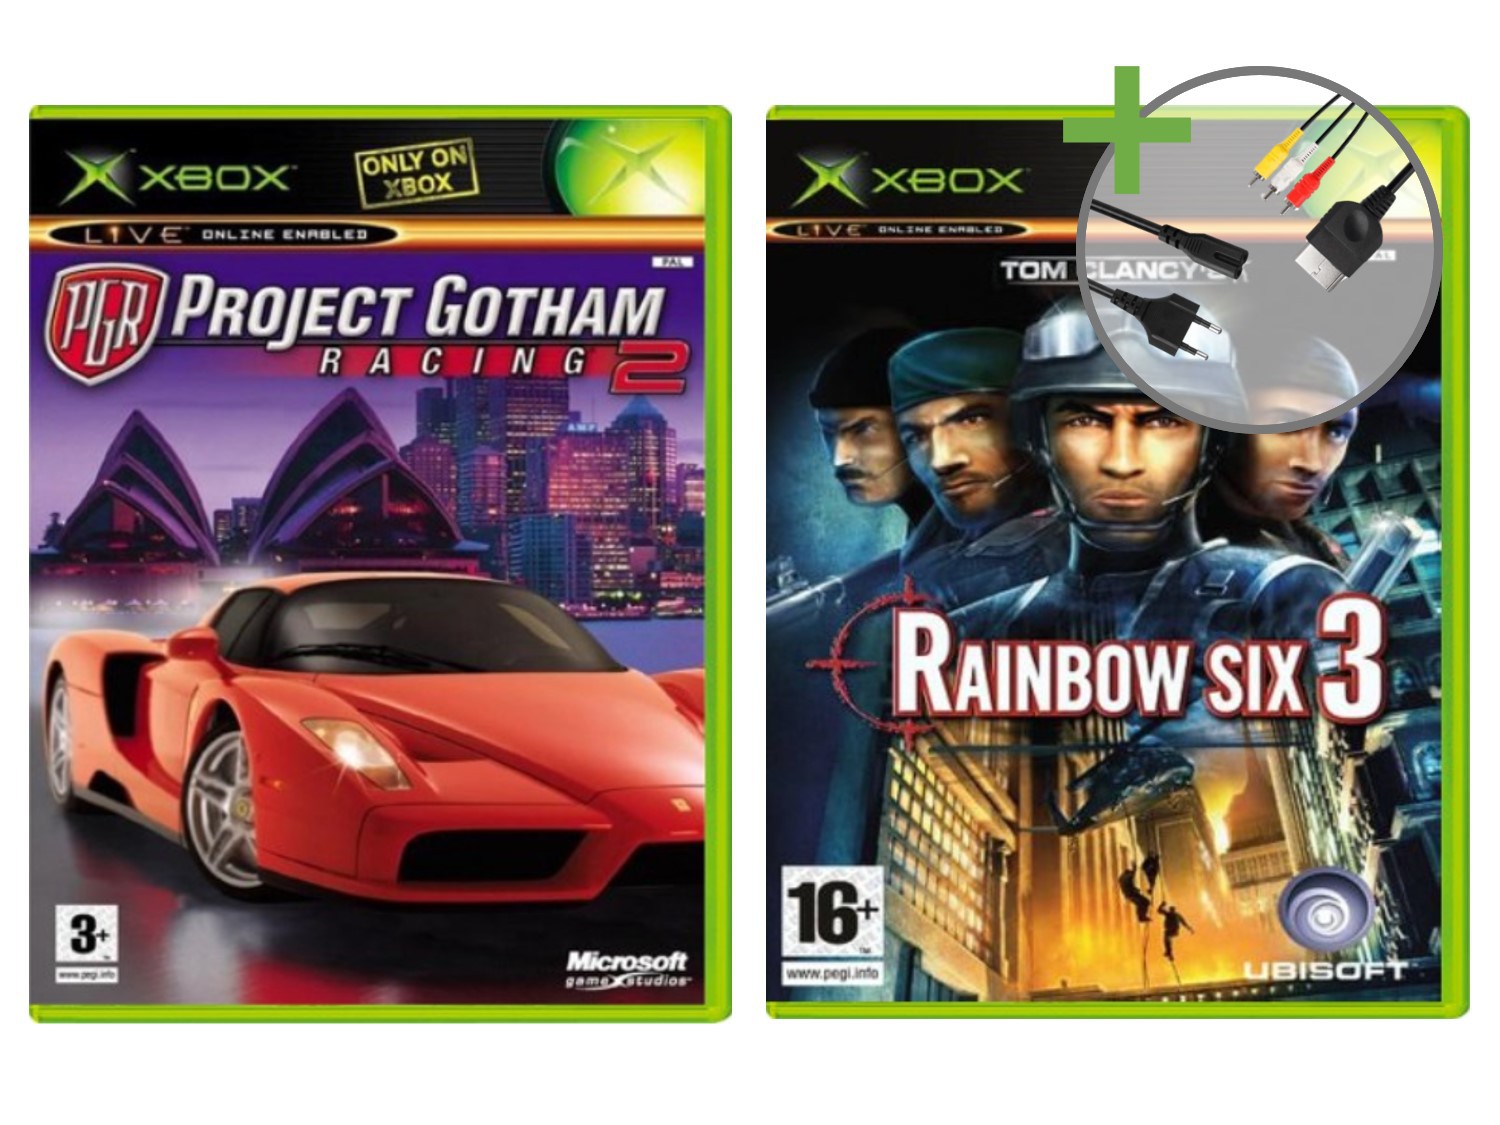 Microsoft Xbox Classic Starter Pack - PGR 2 and Rainbow Six 3 Edition - Xbox Original Hardware - 4